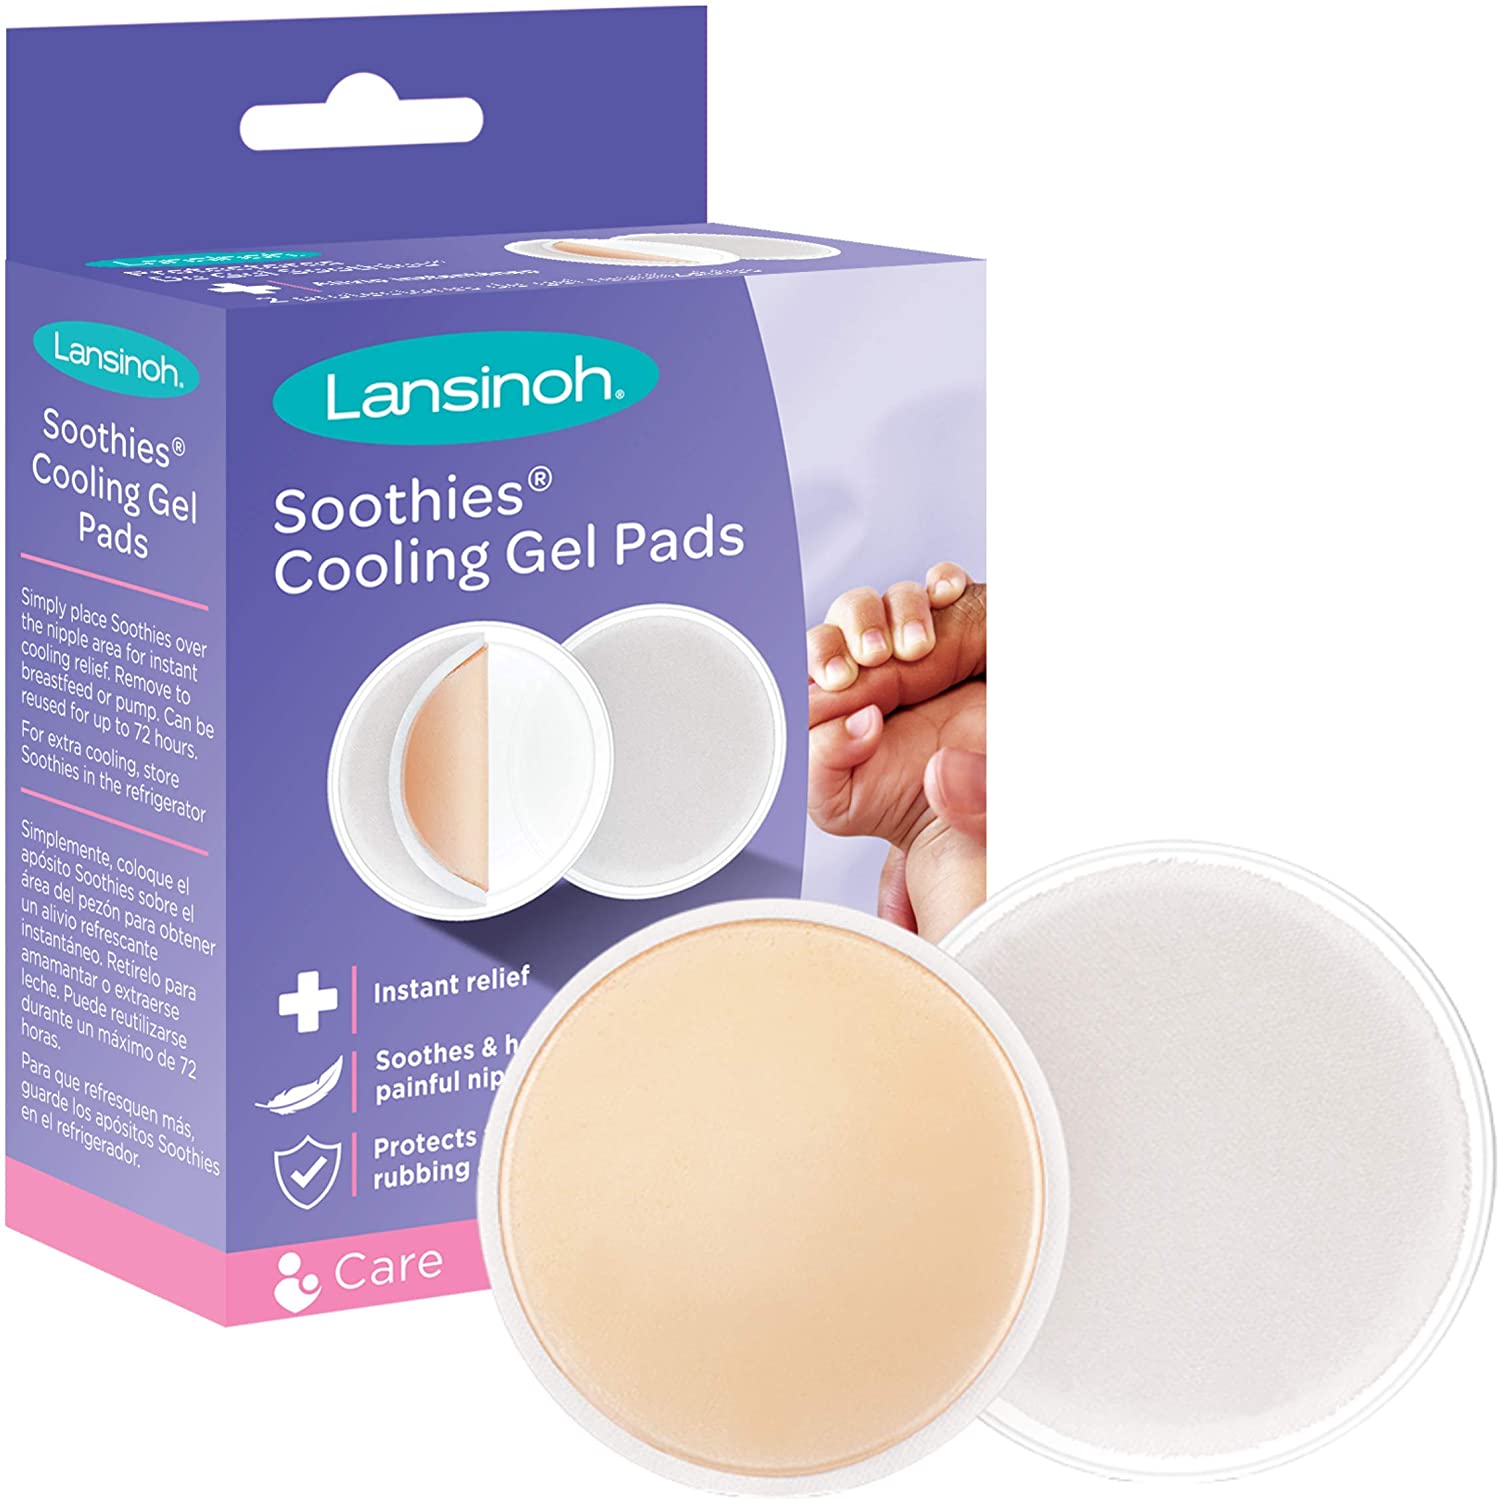 Lansinoh - Soothies Cooling Gel Pads